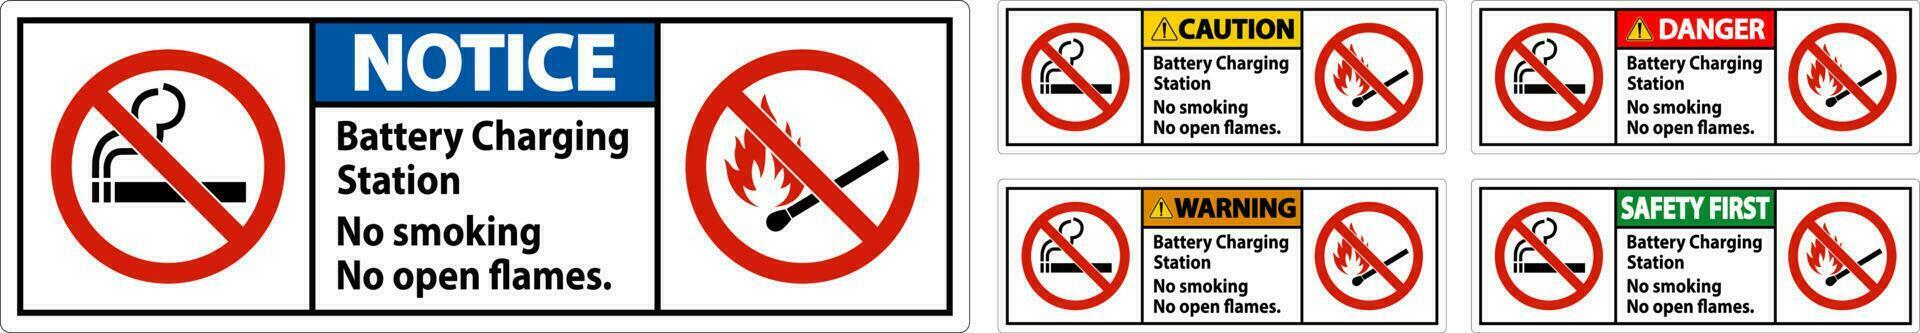 Danger Sign Battery Charging Station, No Smoking, No Open Flames vector